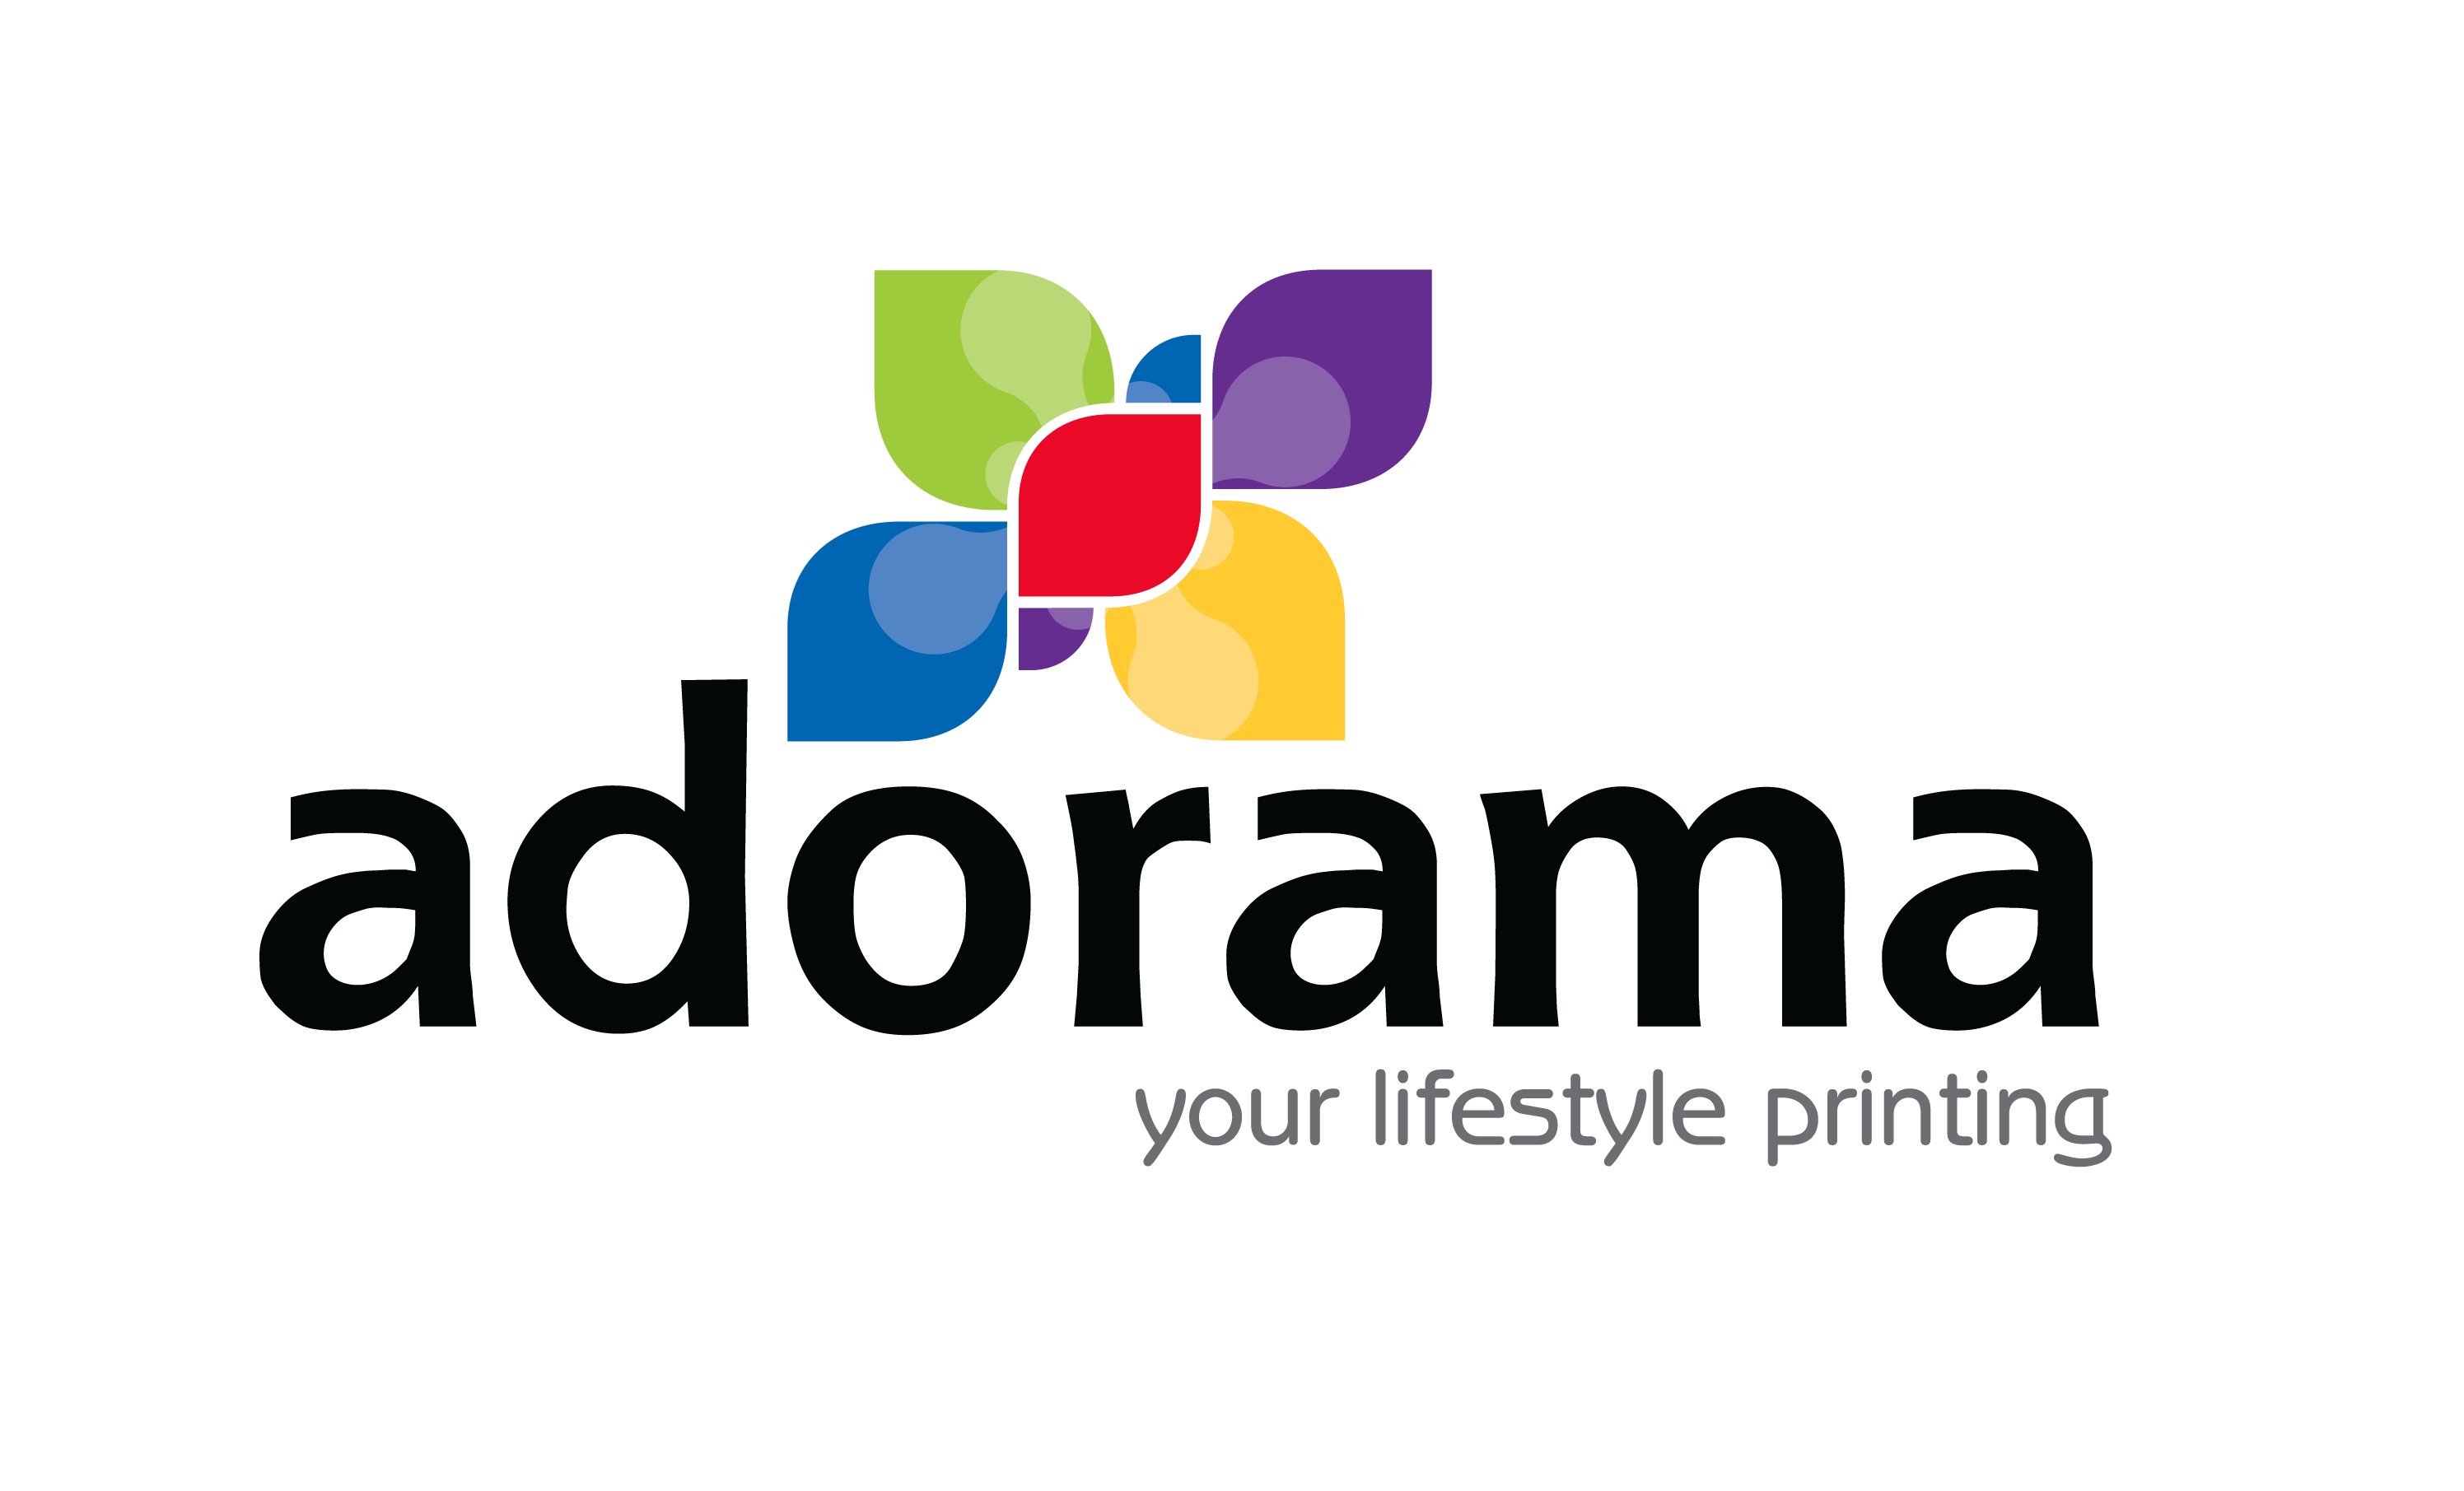 Adorama Printing Official Store